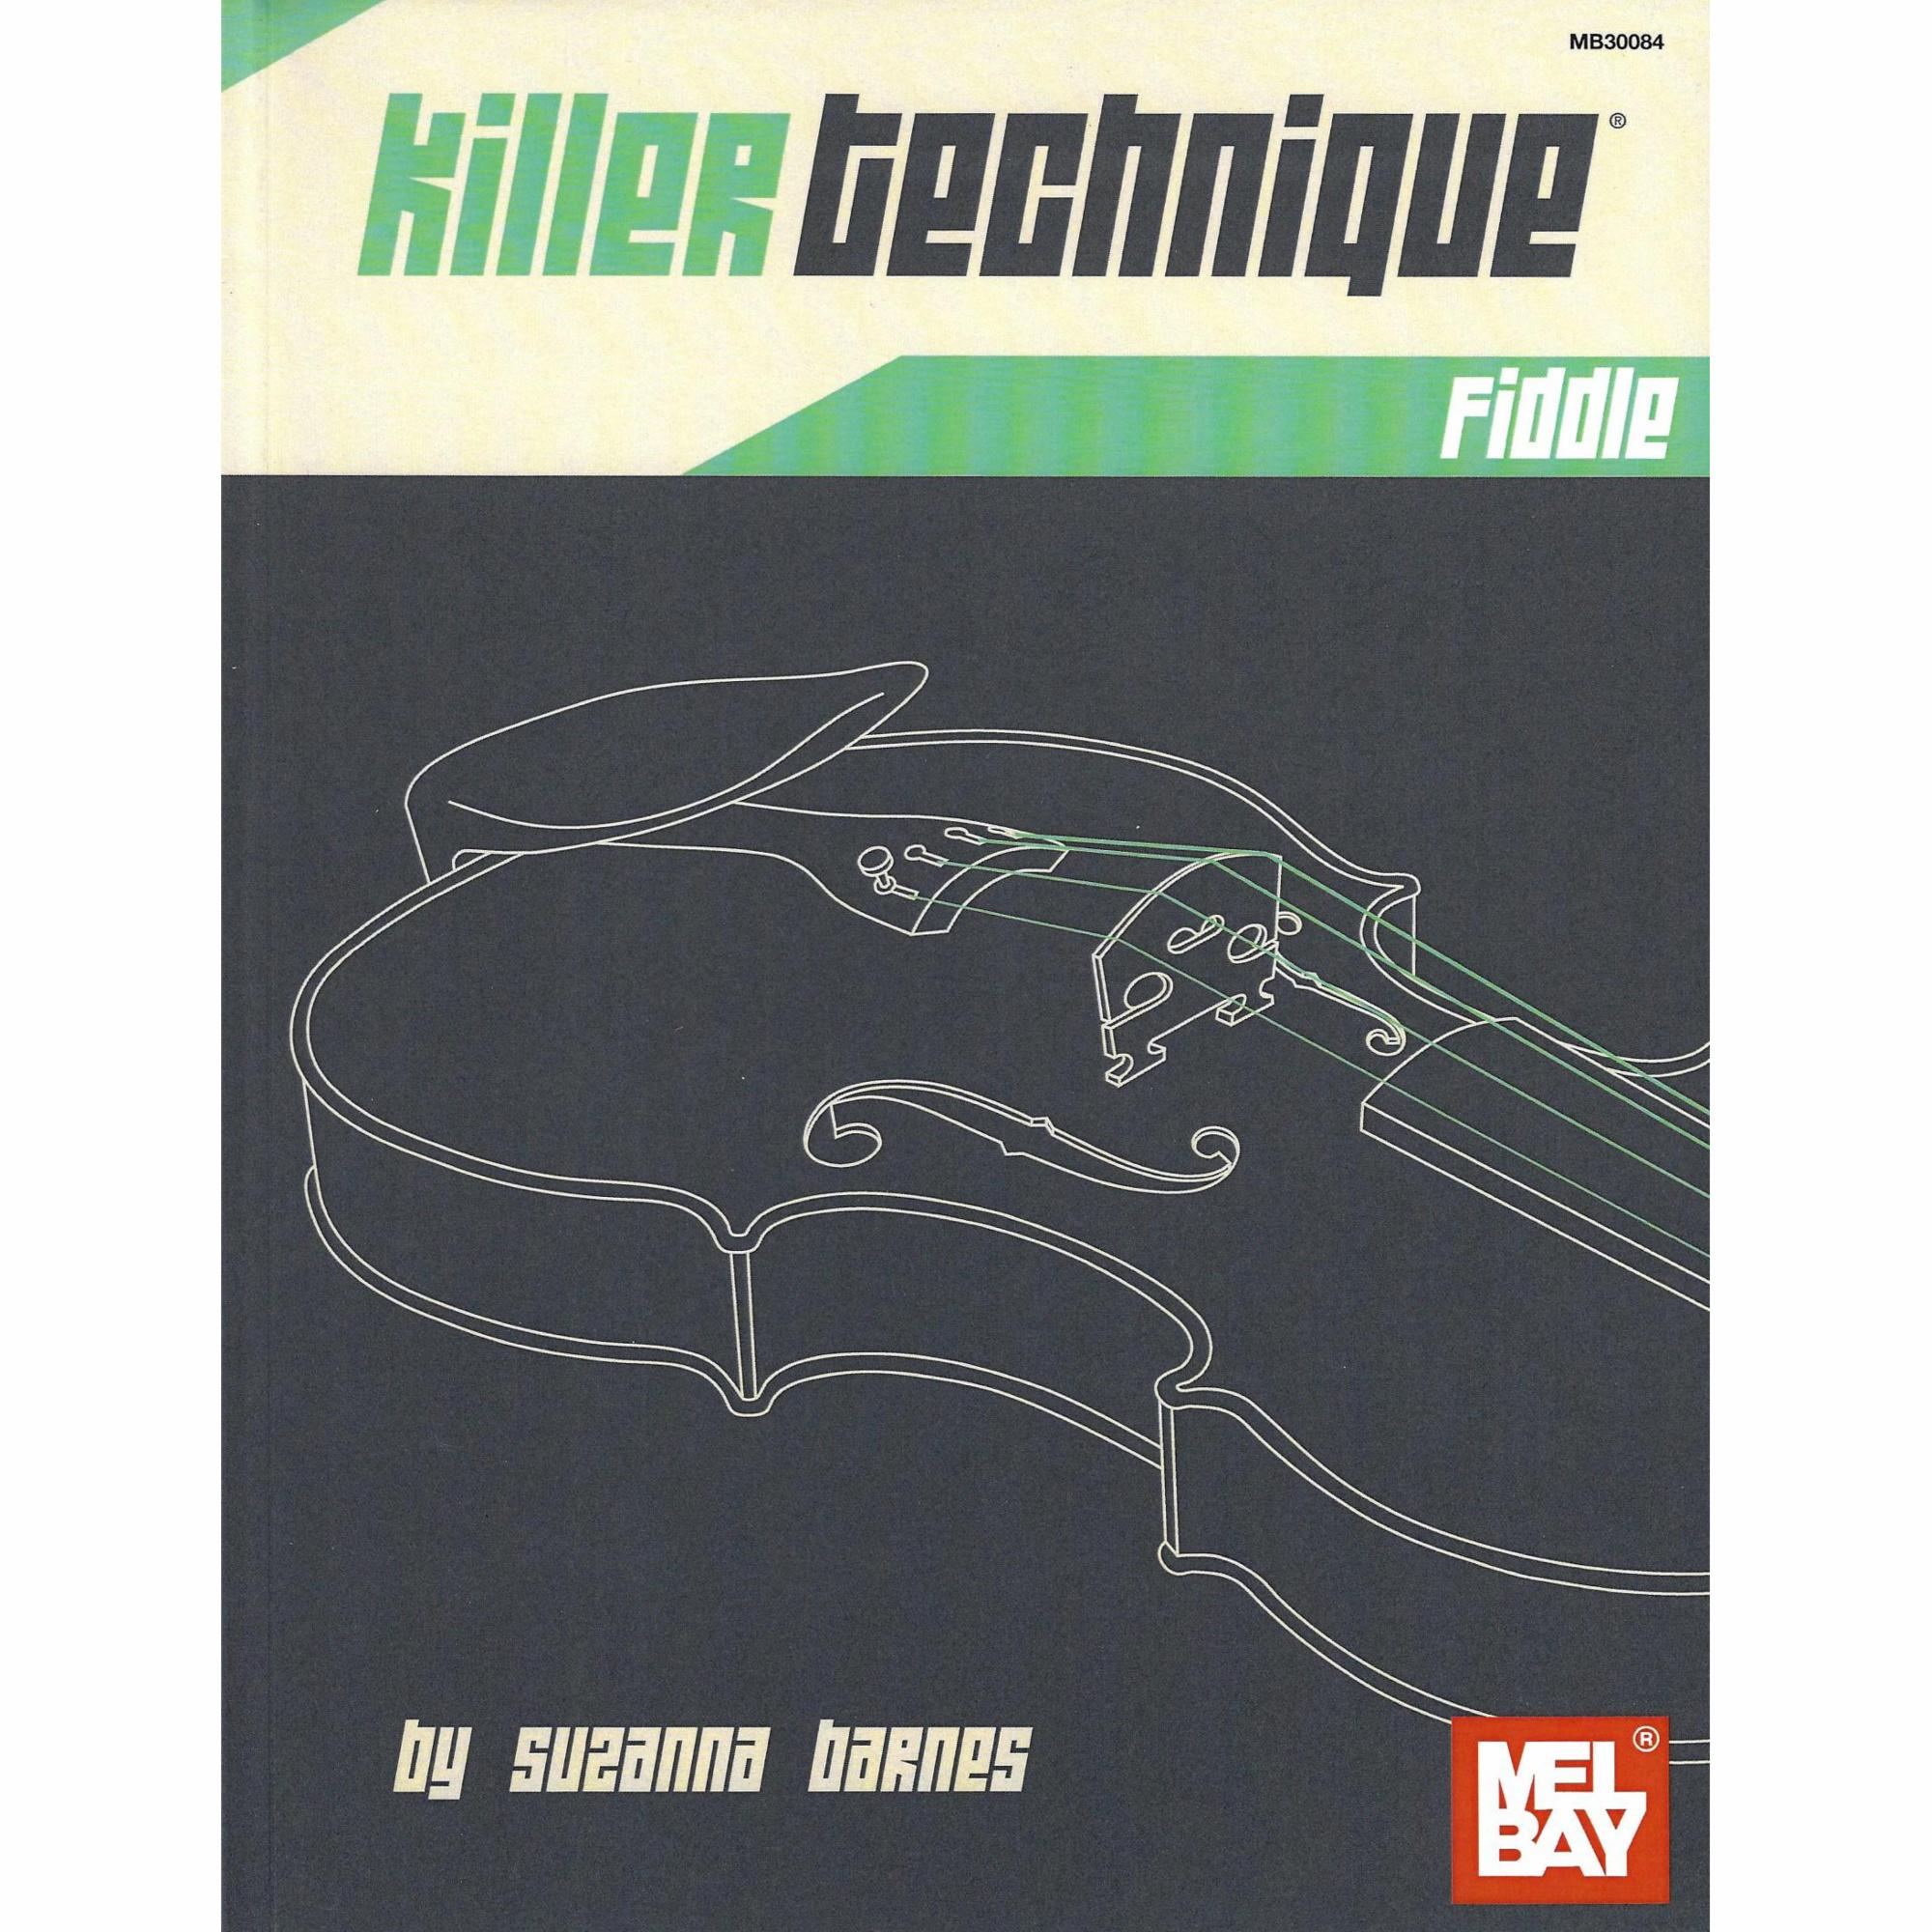 Killer Technique for Fiddle